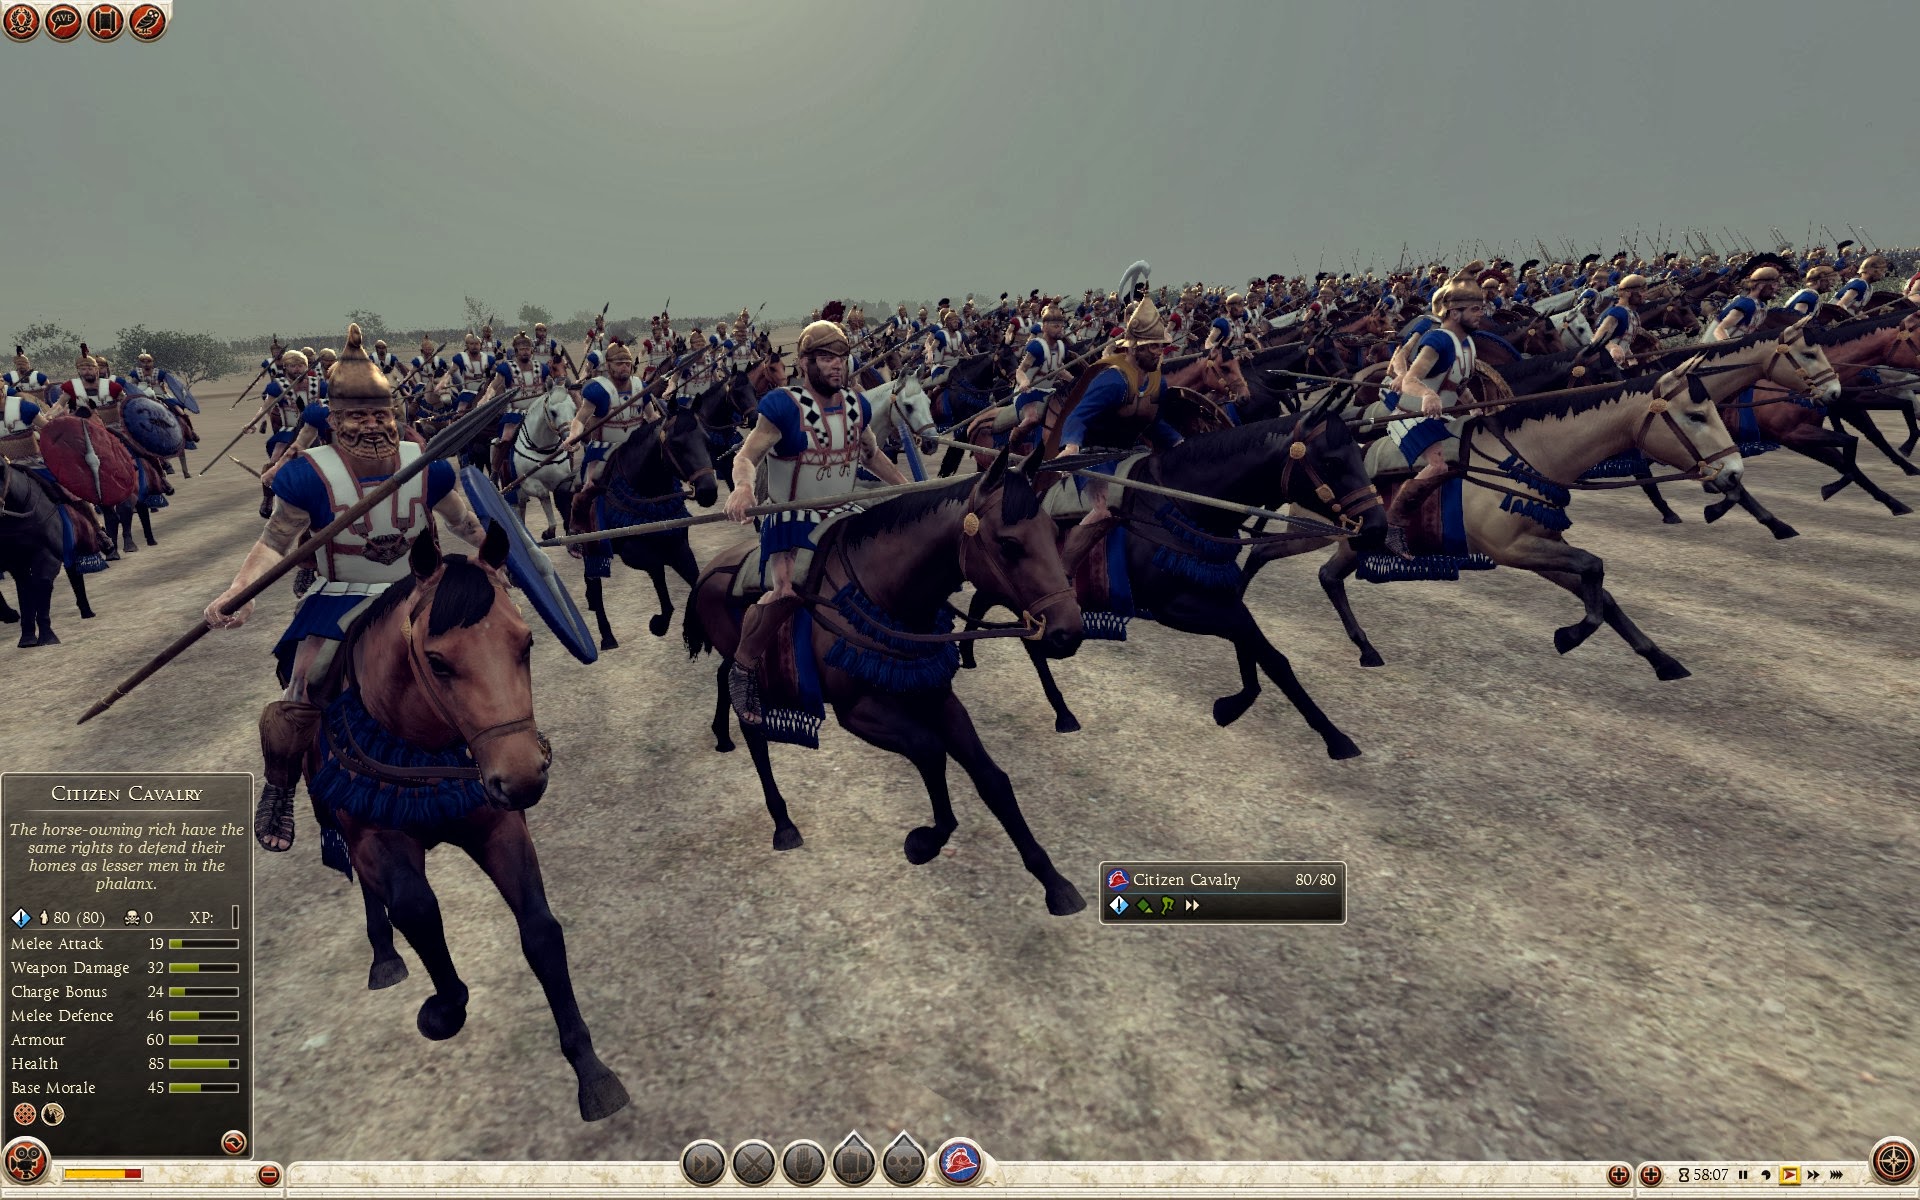 Citizen Cavalry